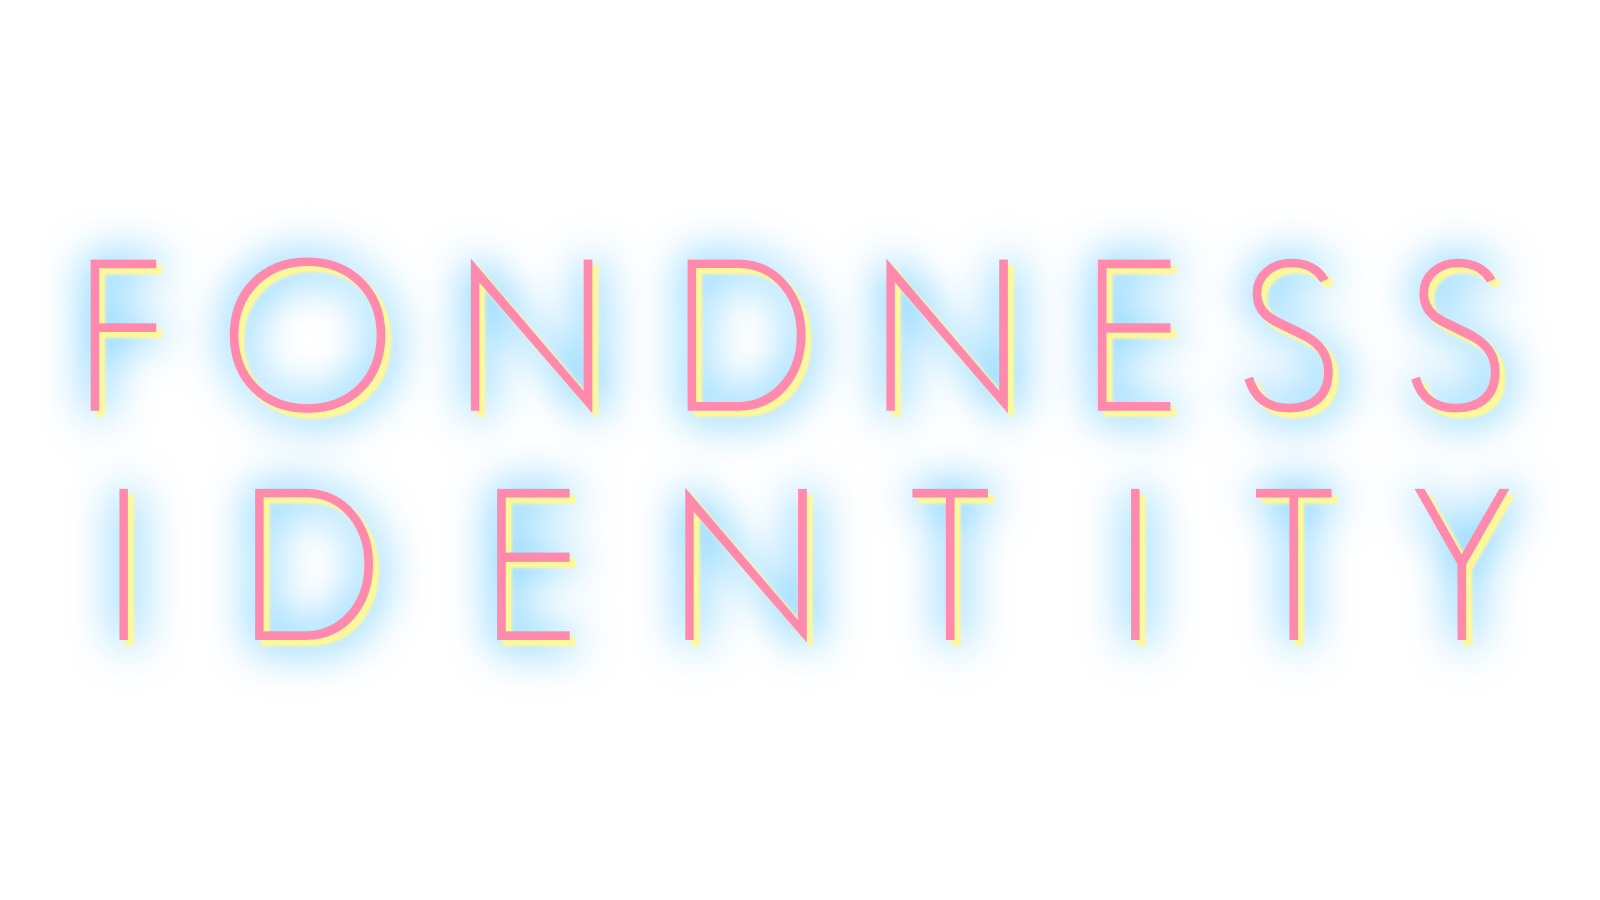 Fondness Identity